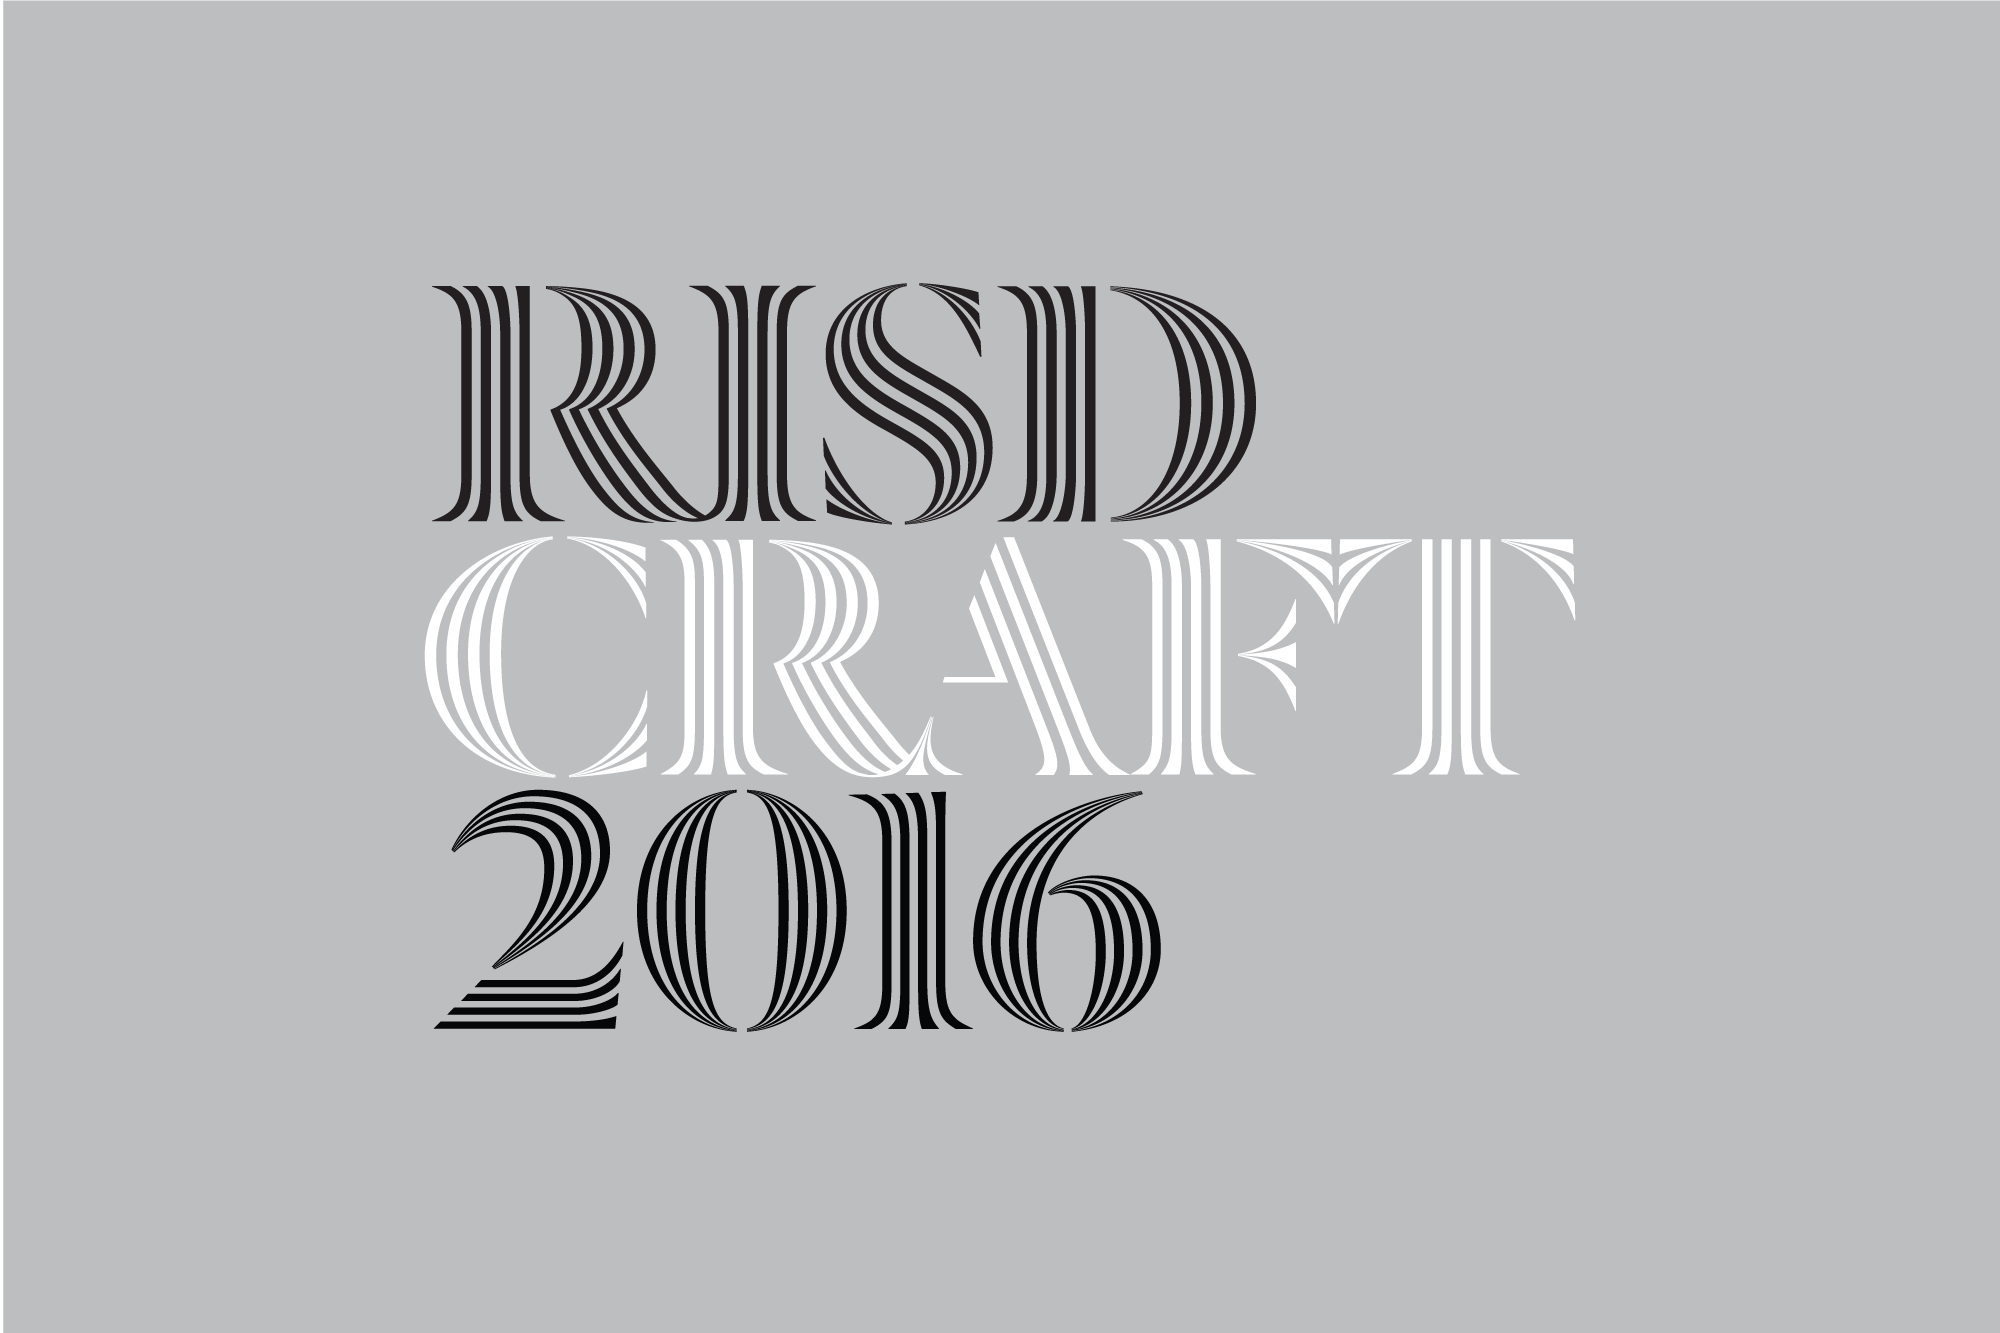 RISD Craft Identity Micah Barrett